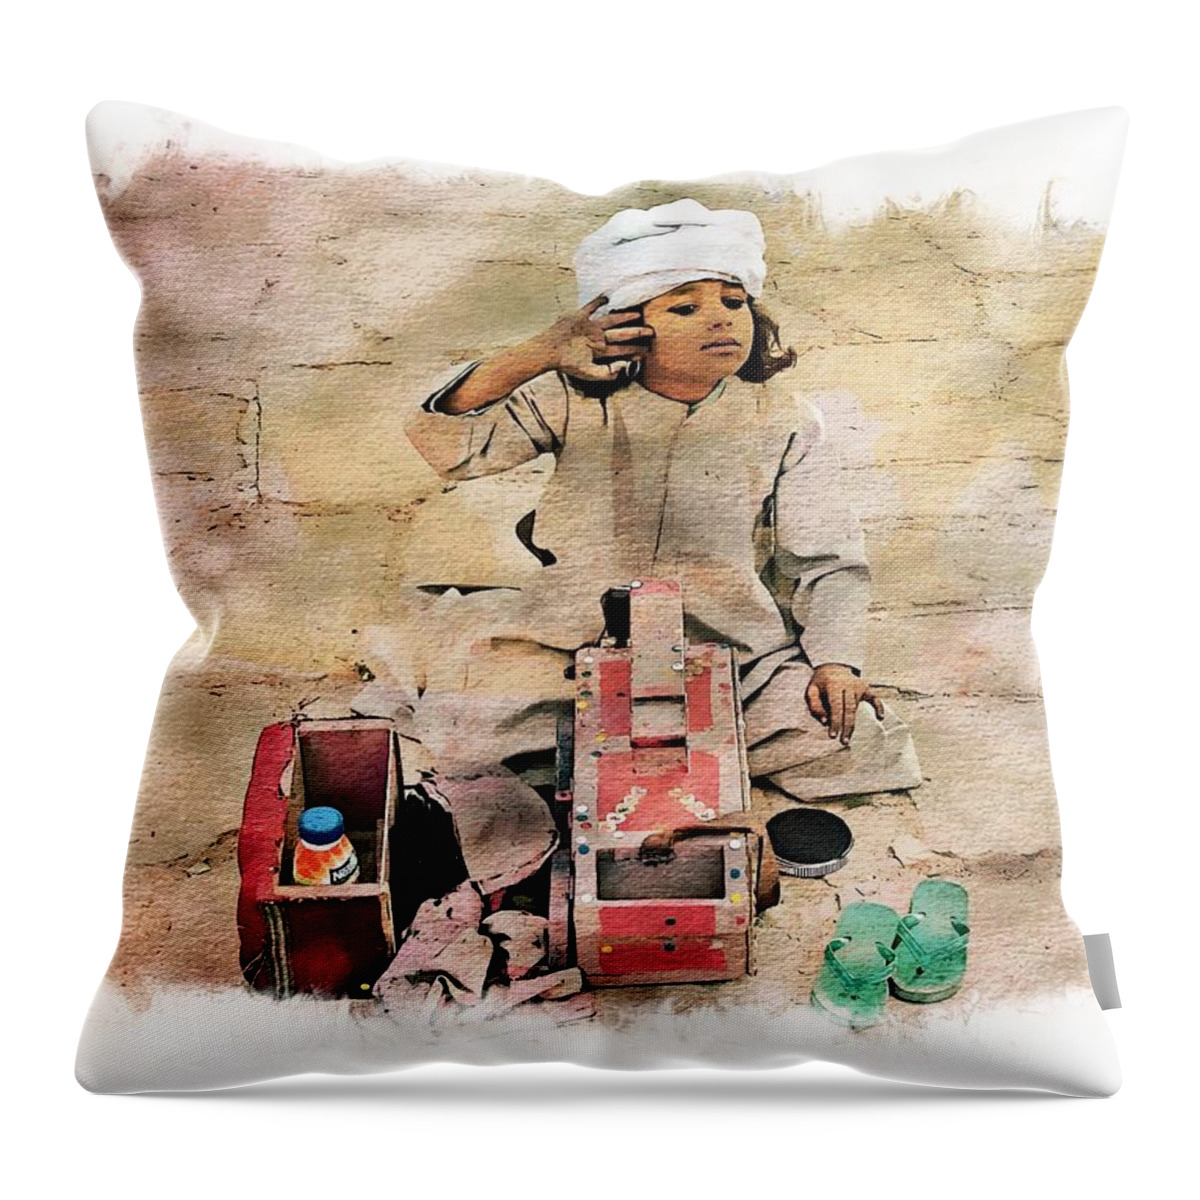 Egypt Throw Pillow featuring the photograph Luxor Shoeshine Girl by Joseph Hendrix